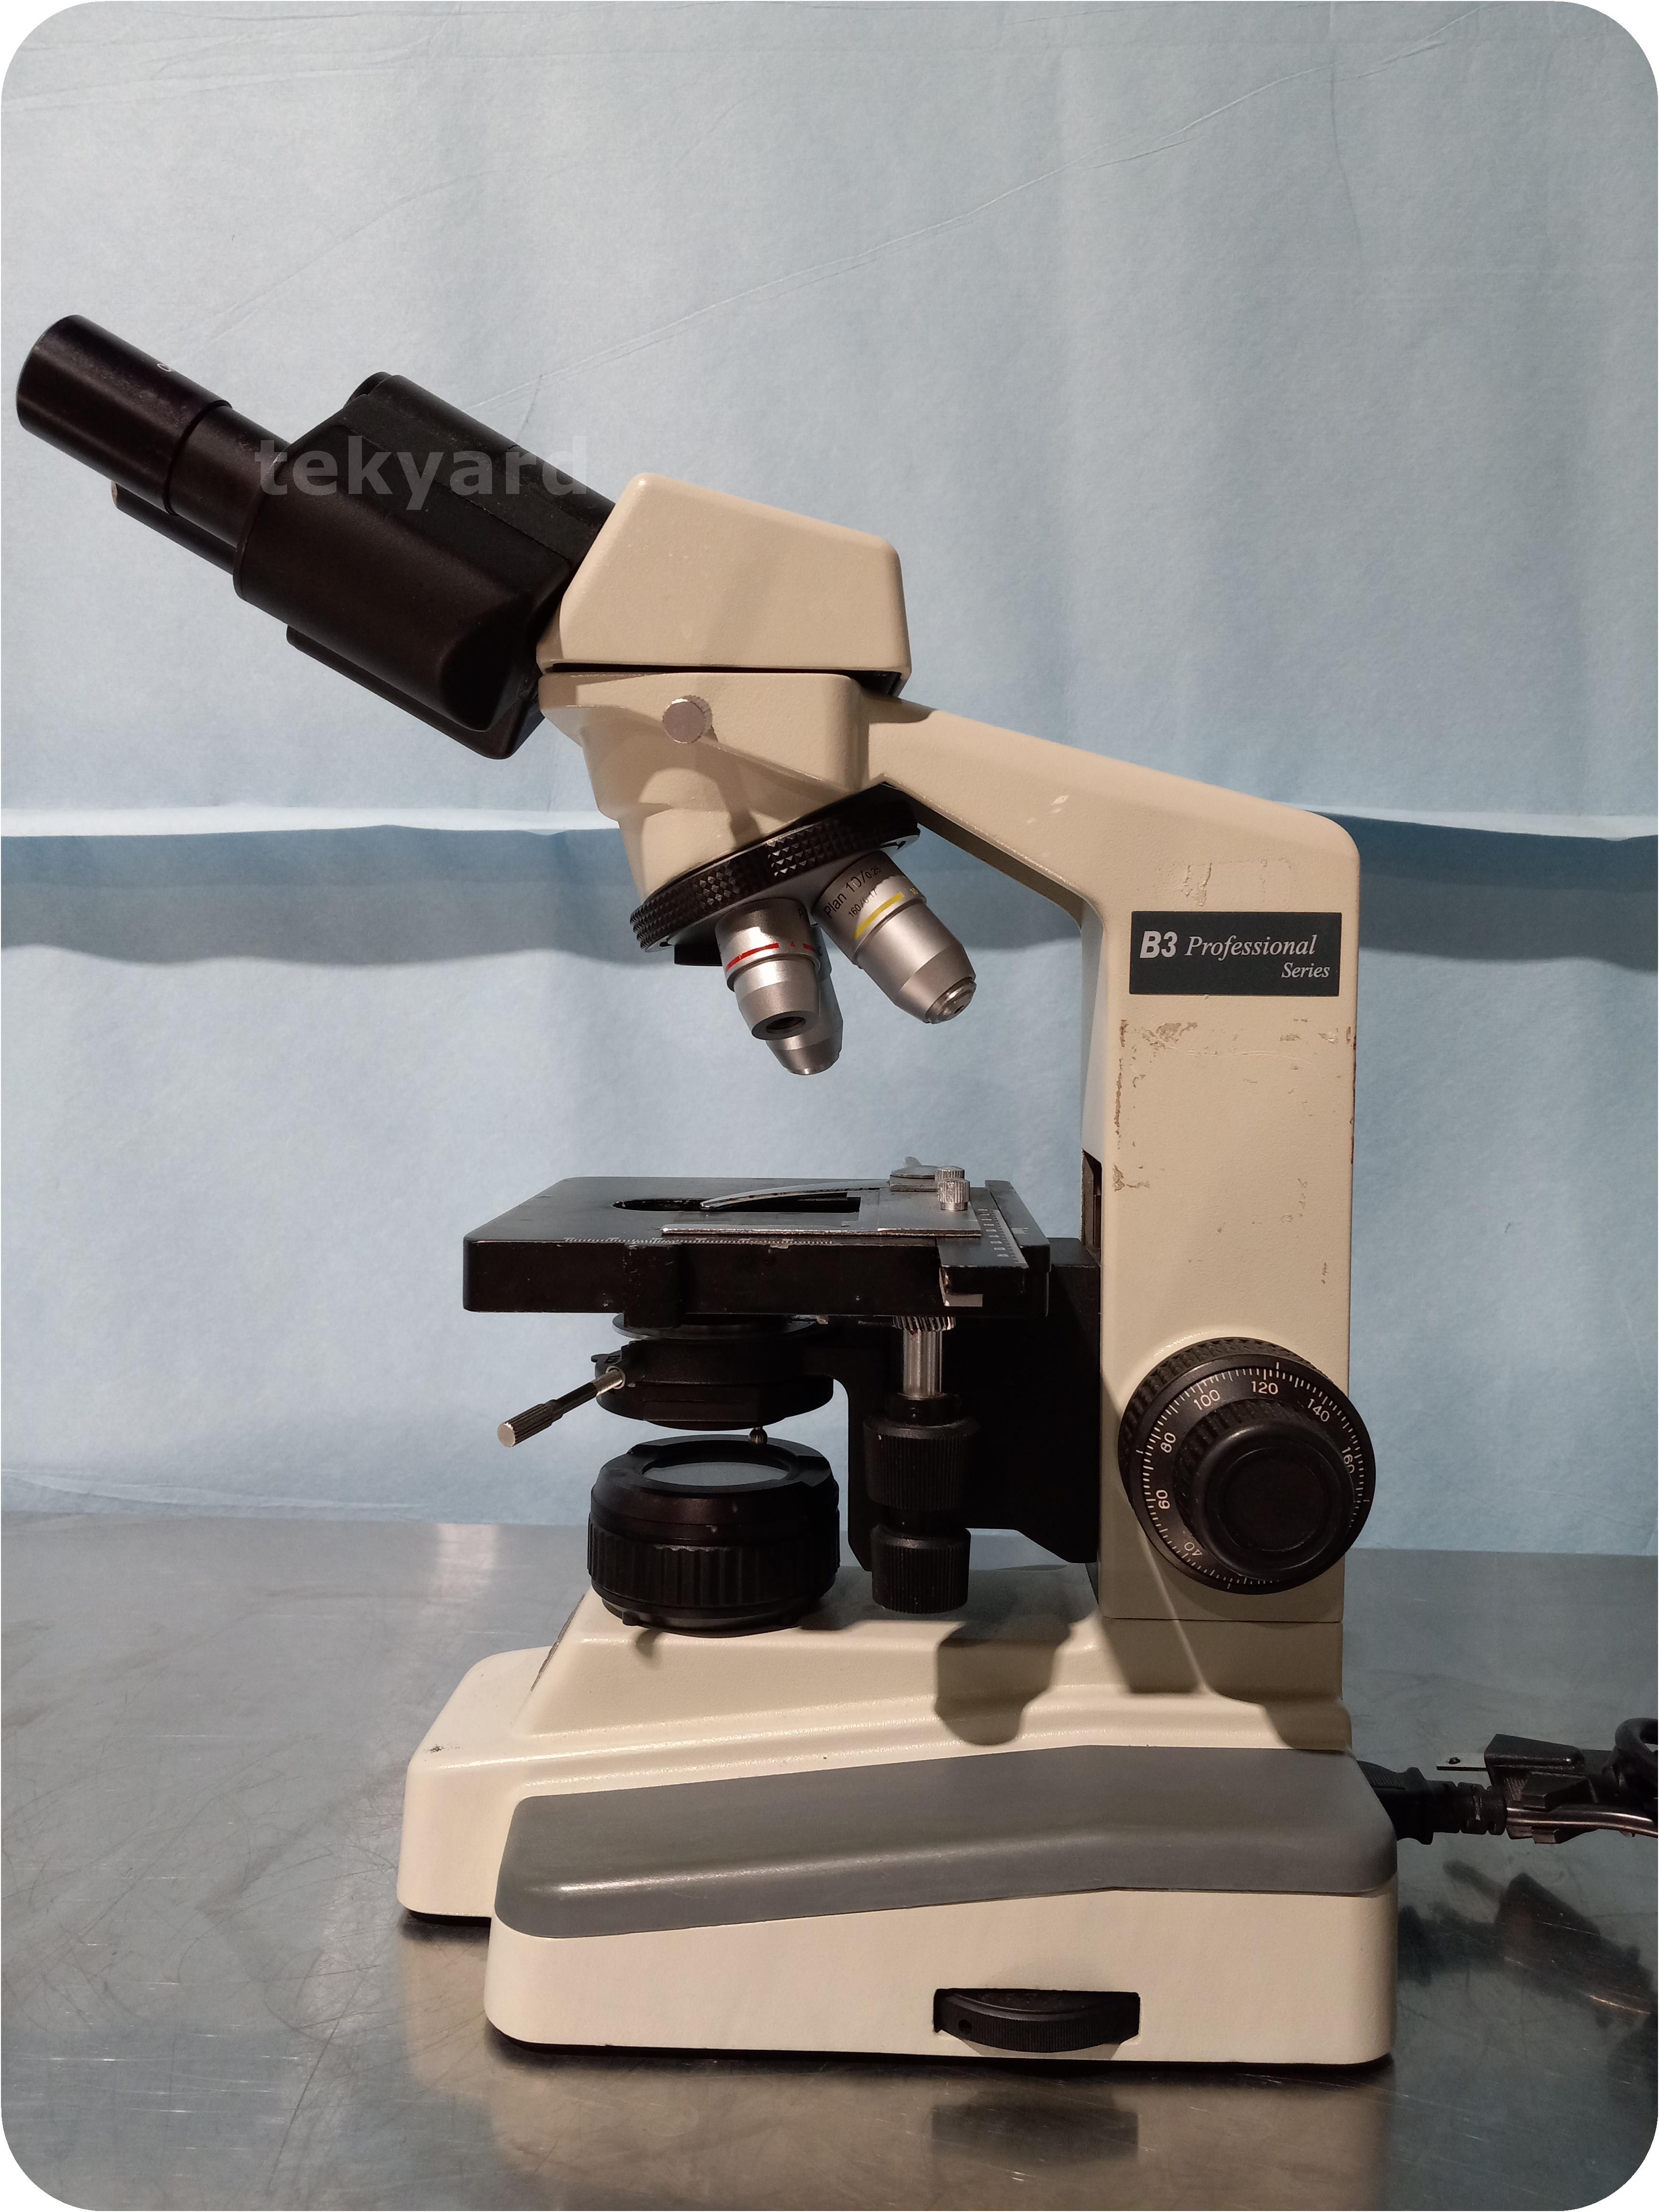 tekyard, LLC. - 298736-Motic B Series Laboratory Microscope